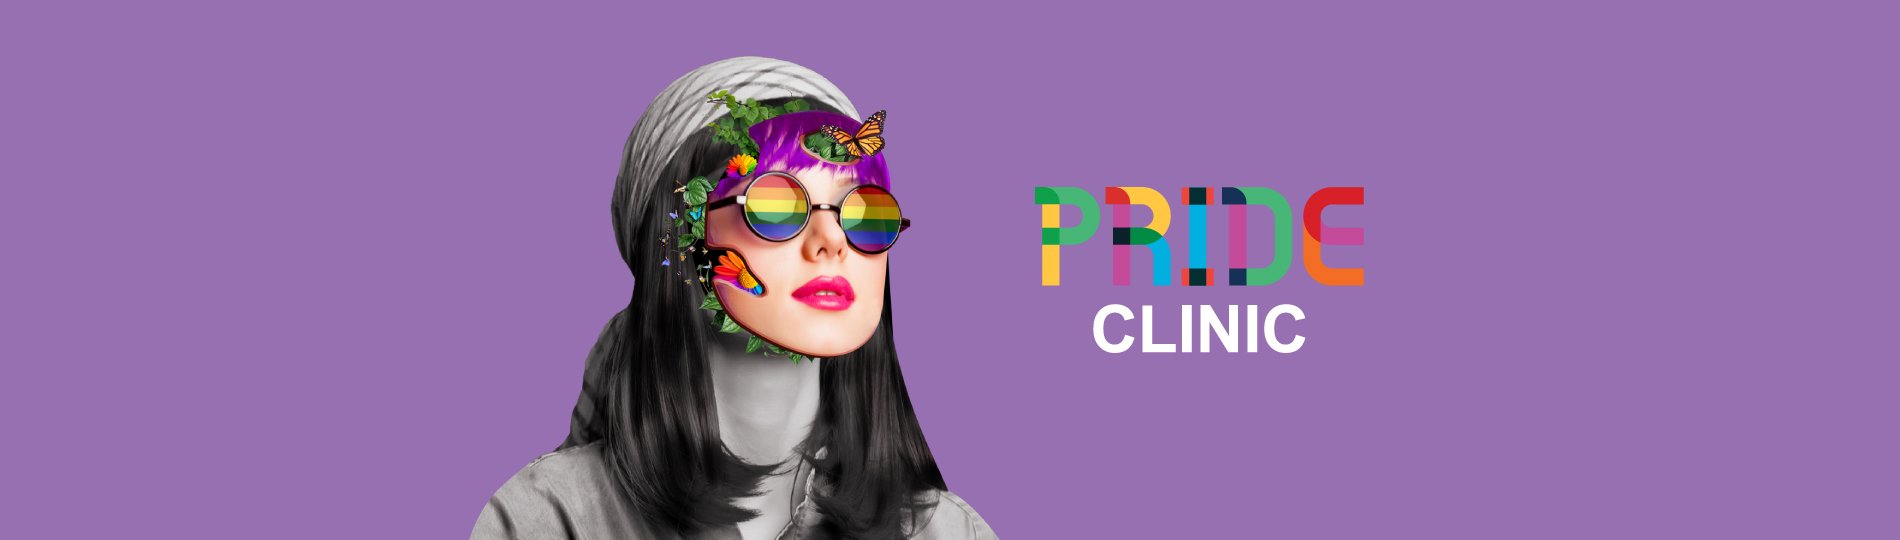 Pride-Clinic_Hero-banner-2_Desktop_AW5.jpg